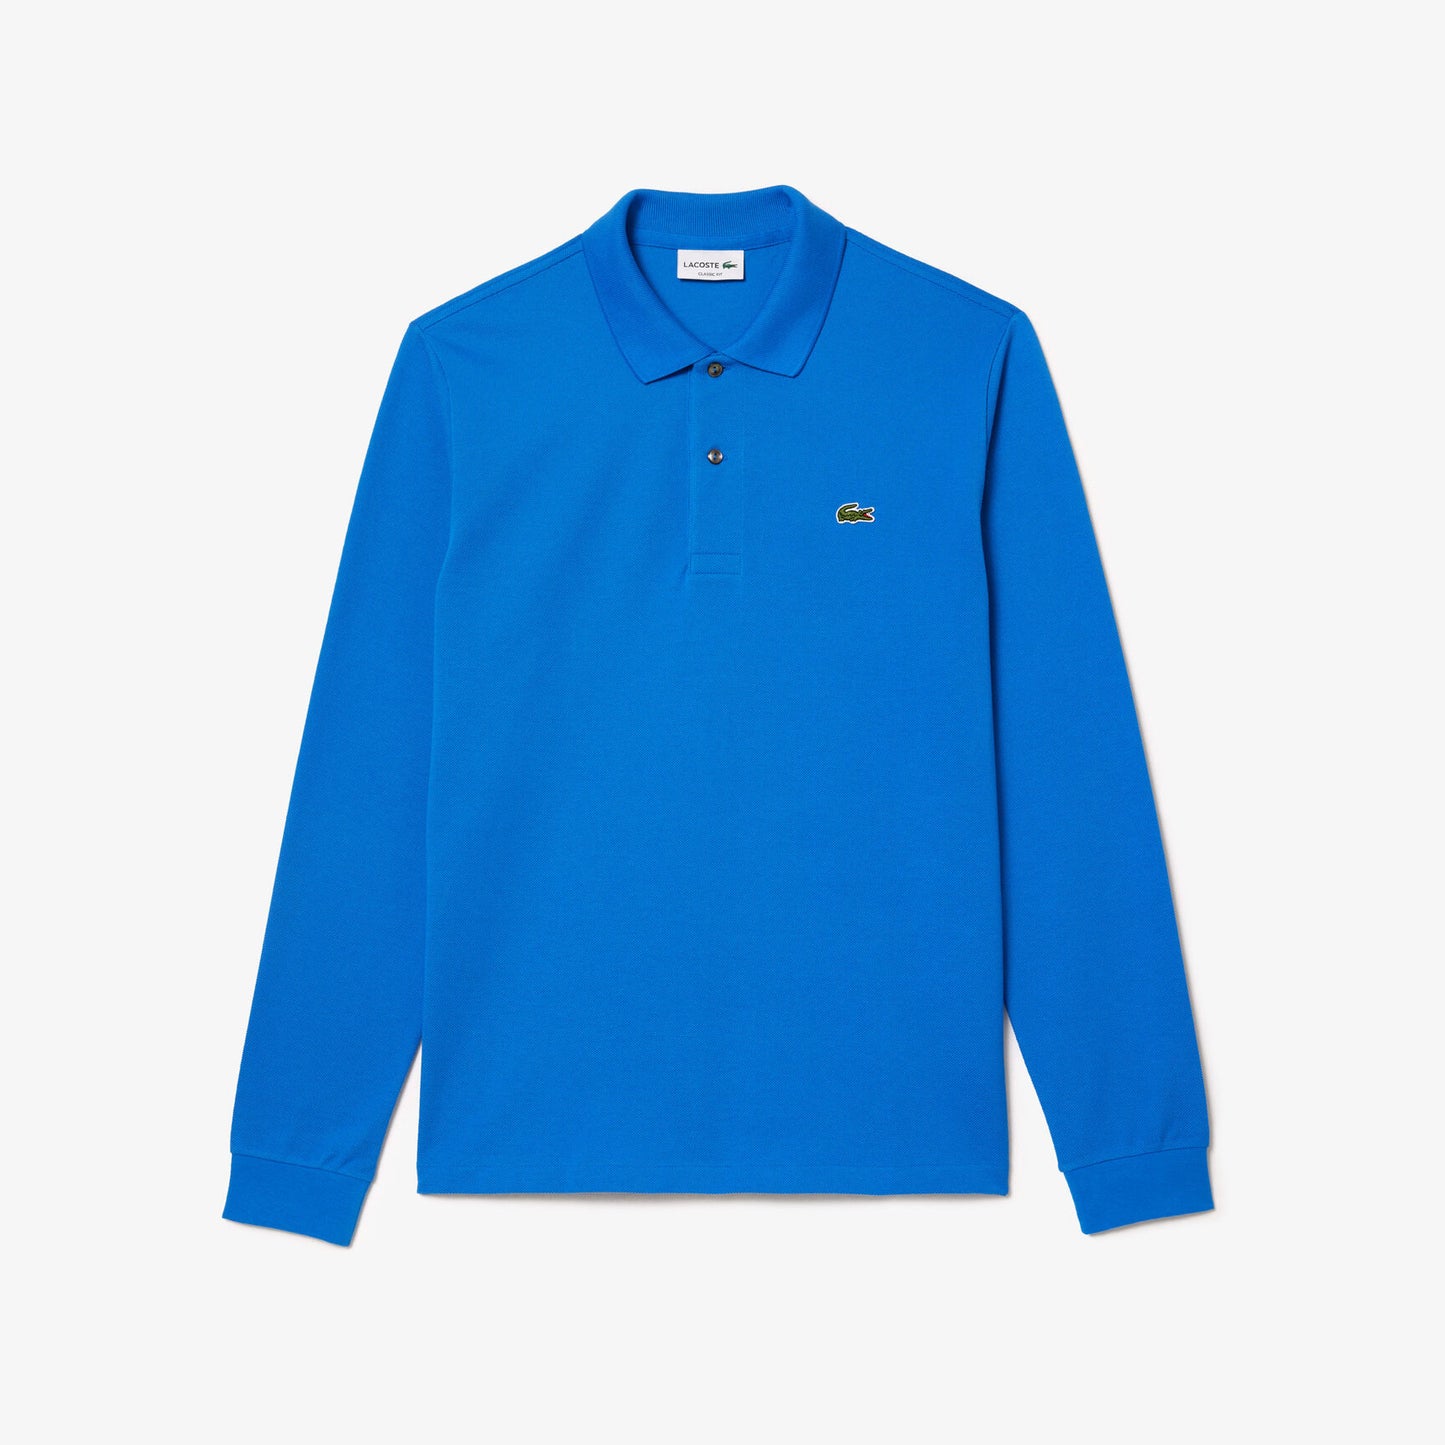 Original L.12.12 Long Sleeve Cotton Polo Shirt - L1312